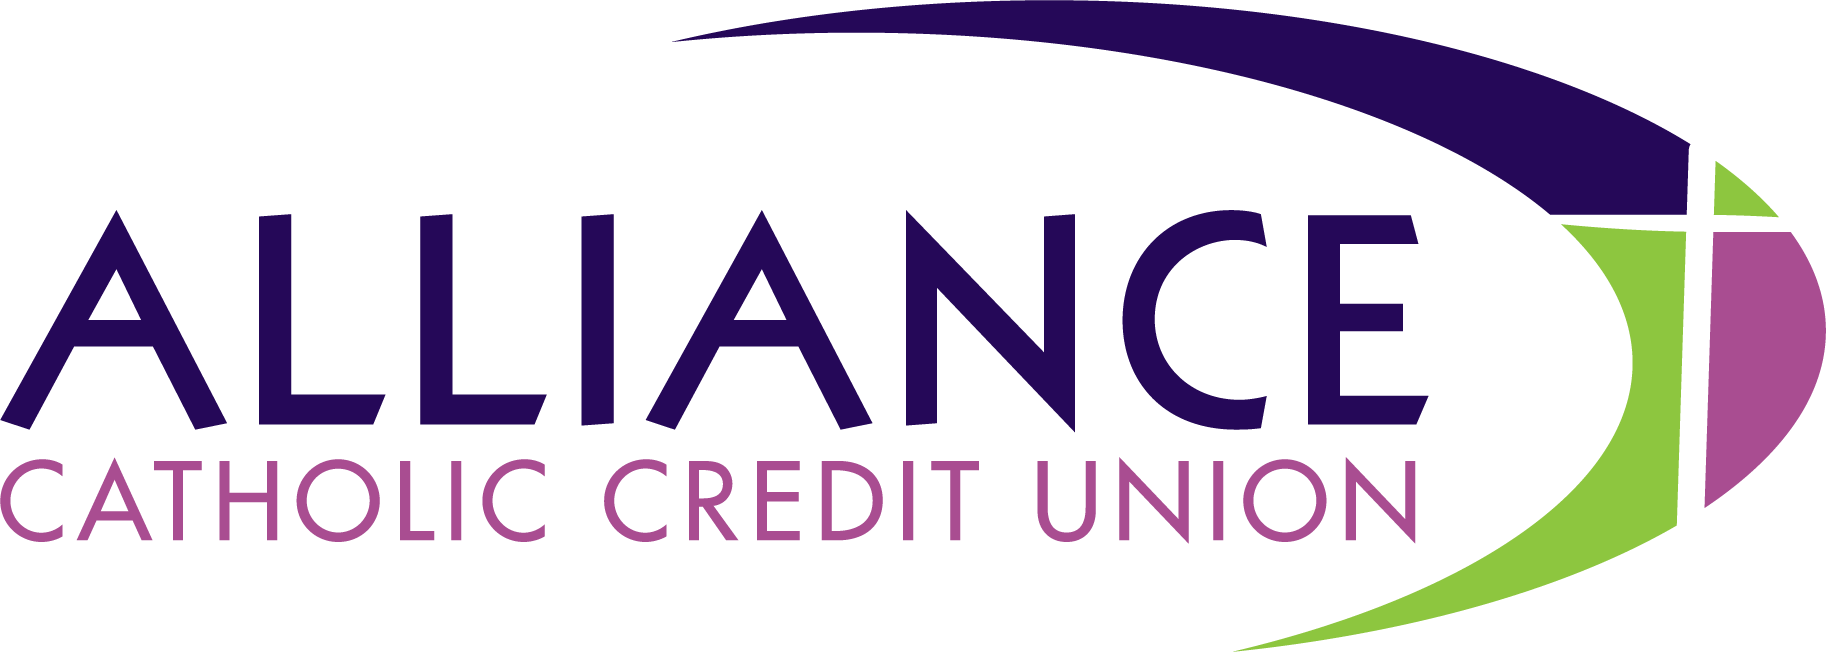 Alliance Catholic Credit Union logo in full color